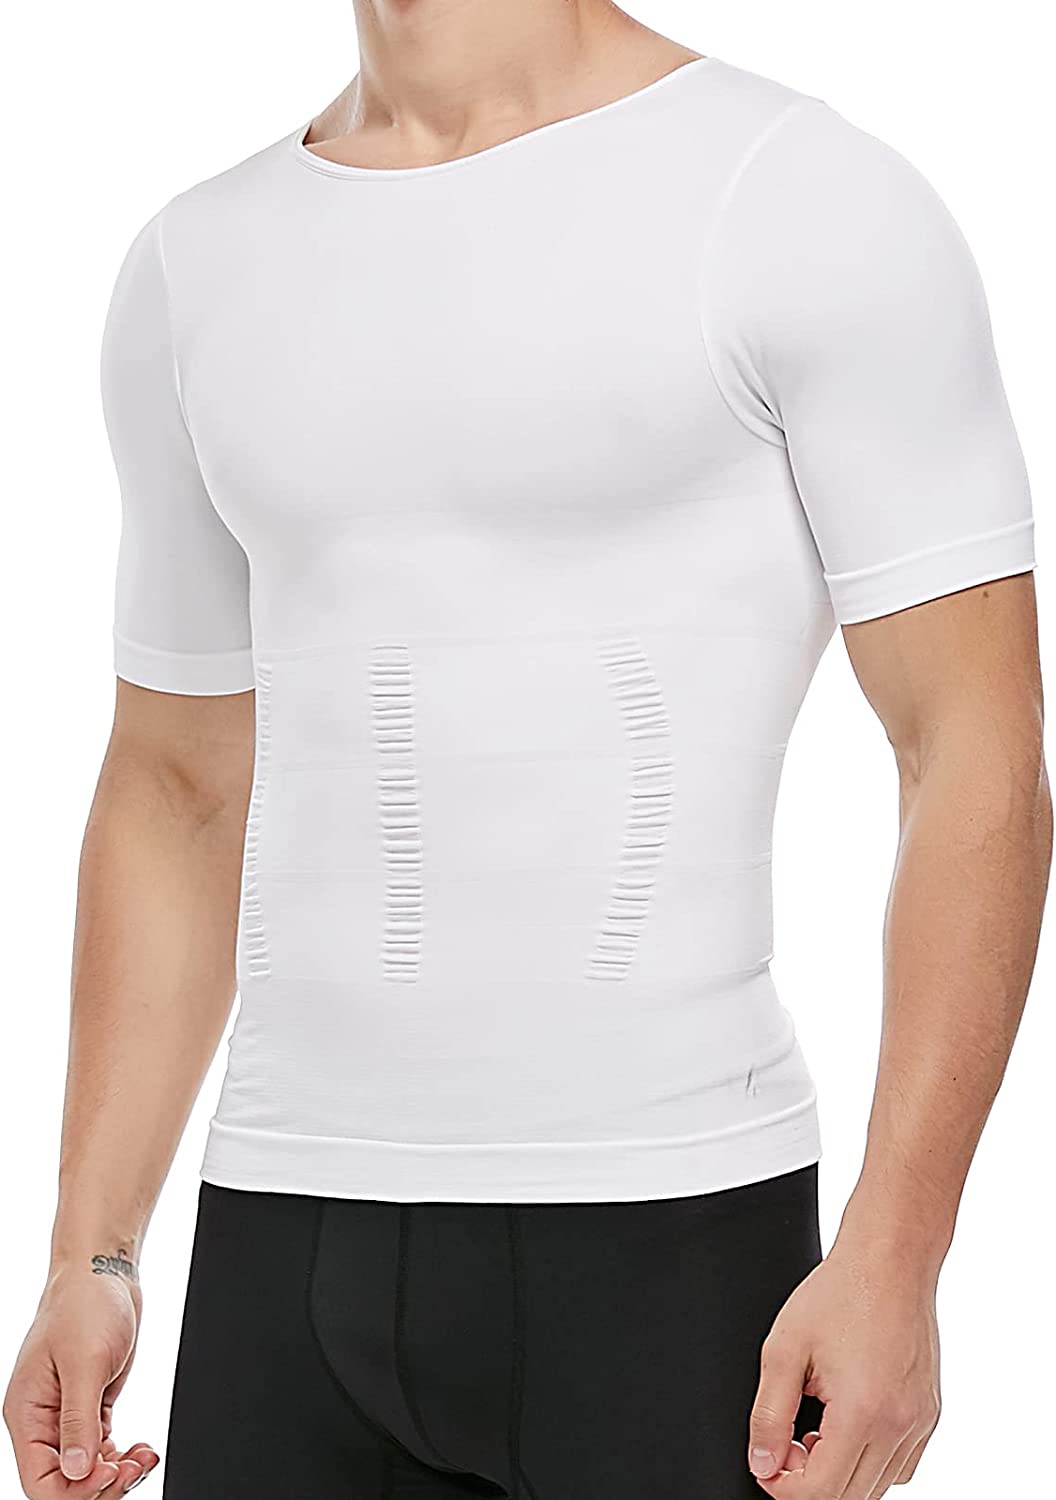 Men S Slimming T Shirt WholeSale - Price List, Bulk Buy at